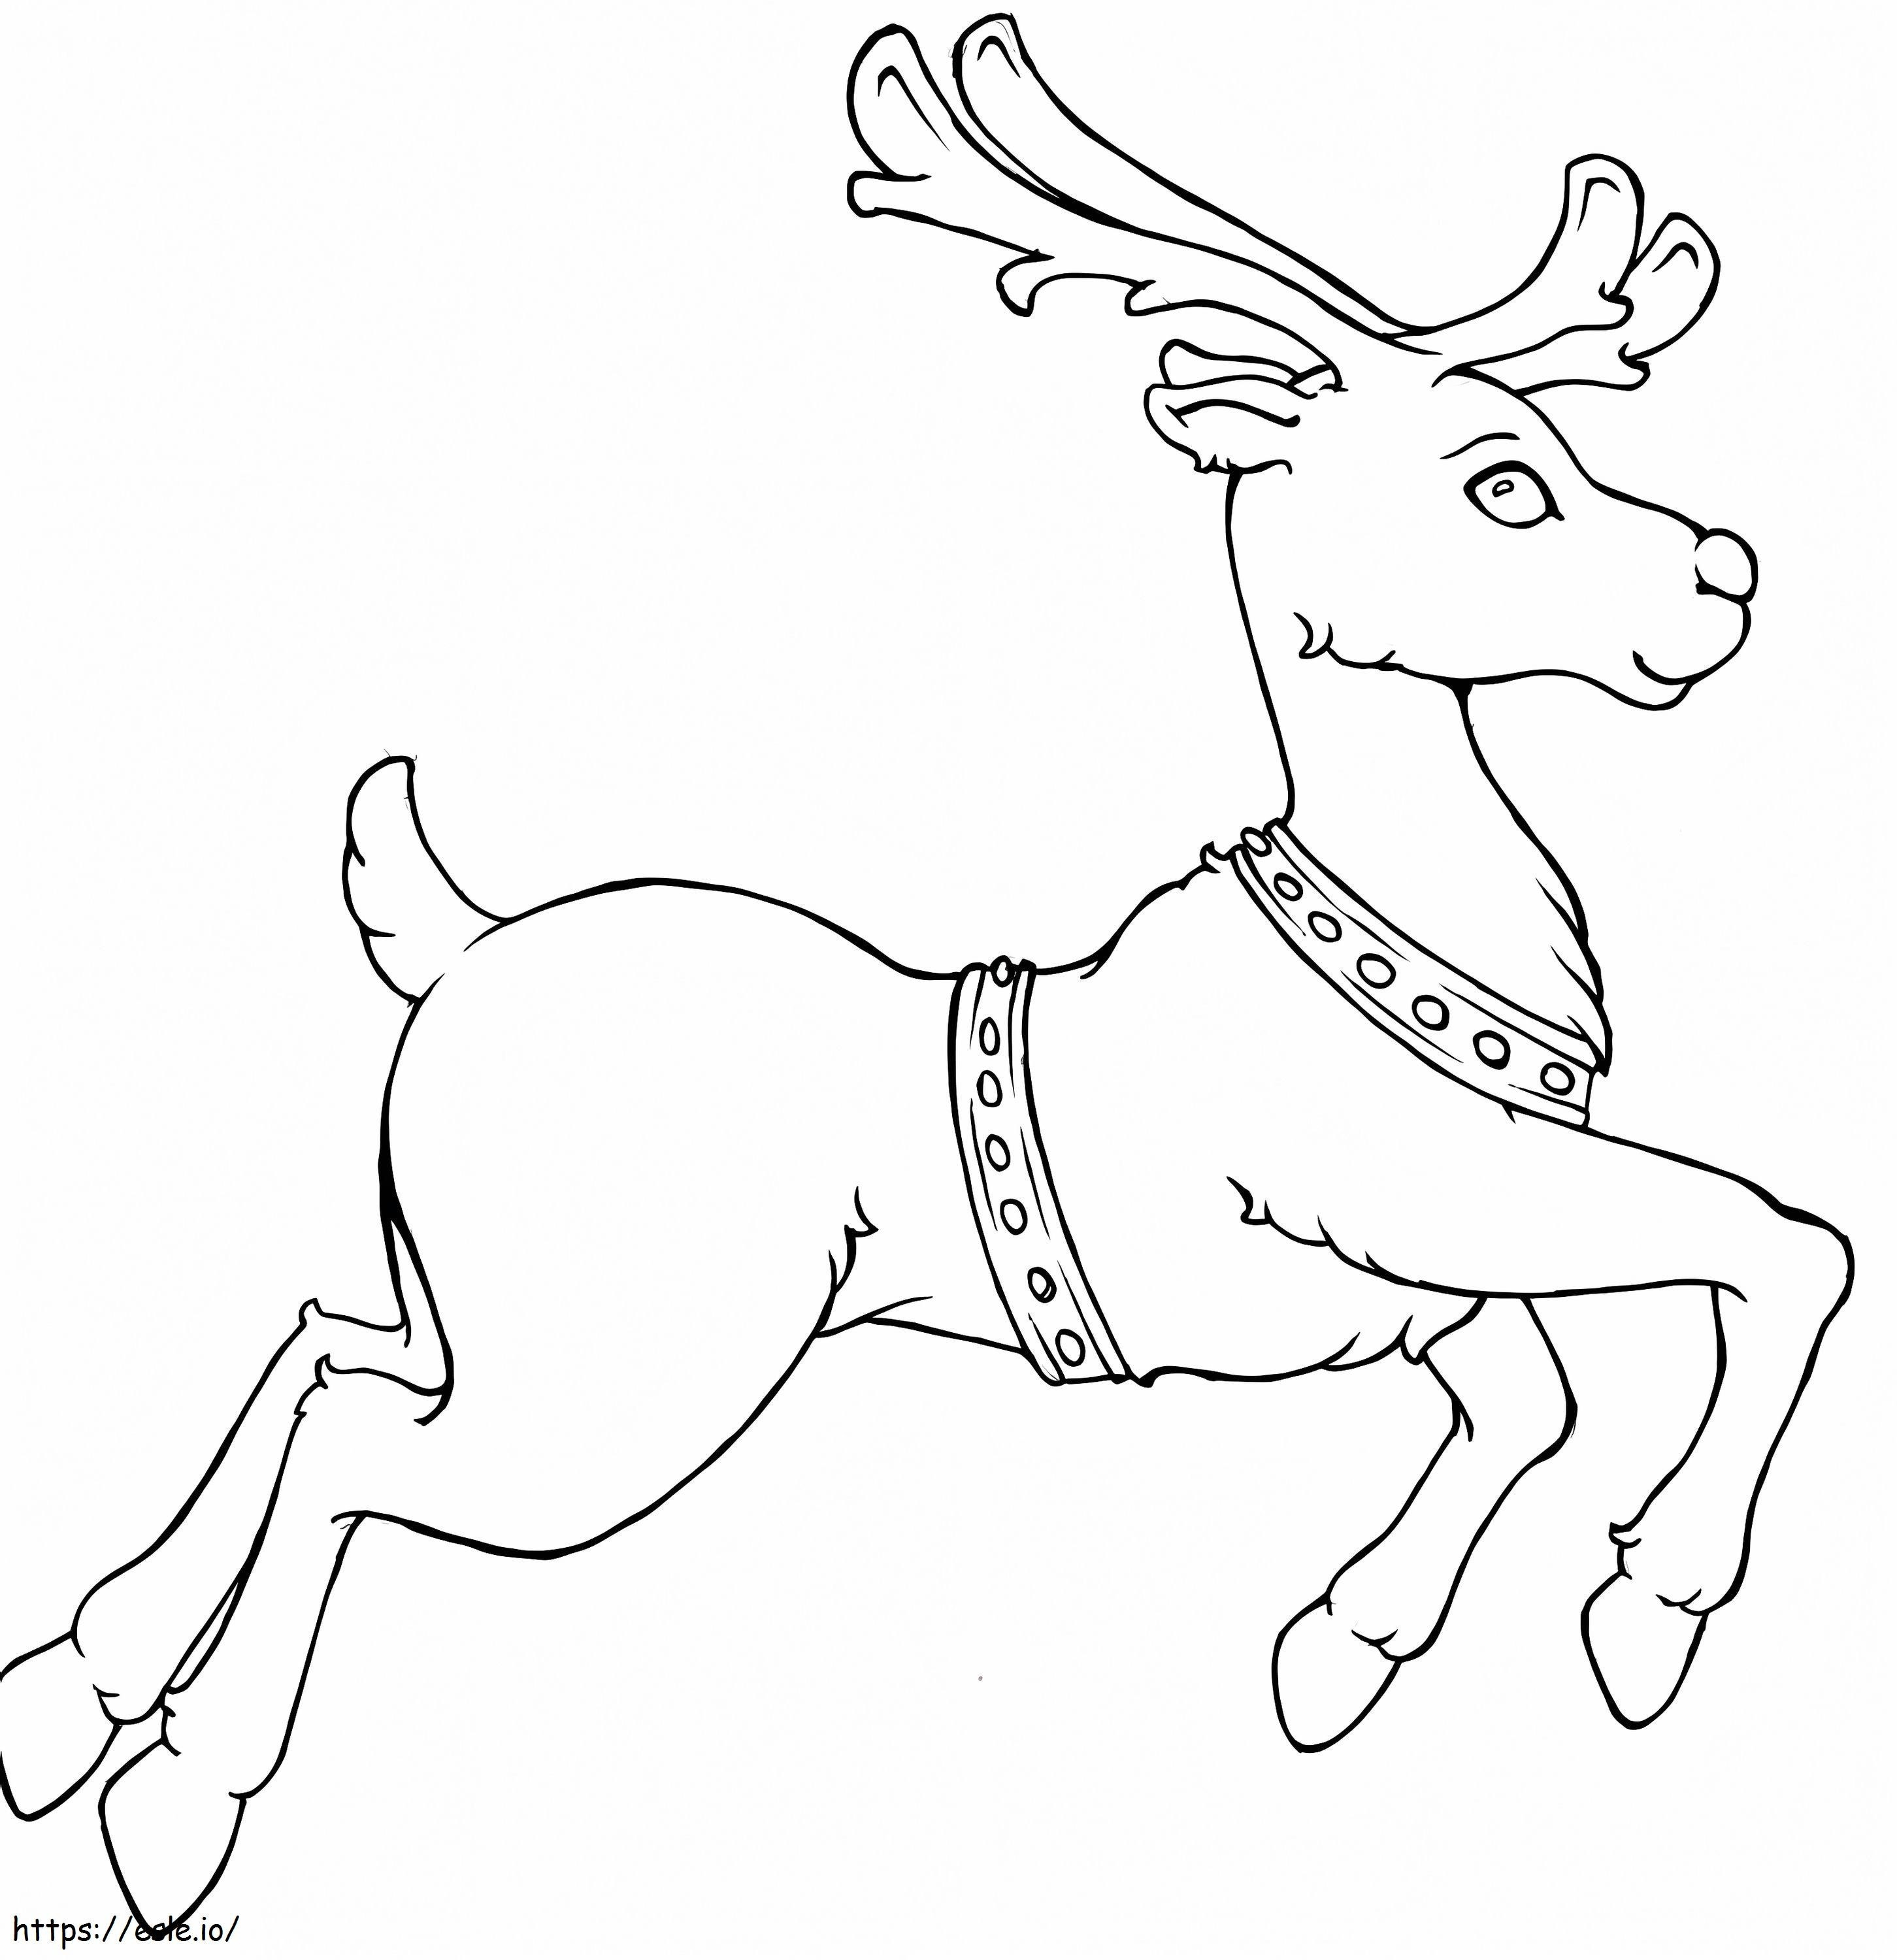 Running Reindeer coloring page